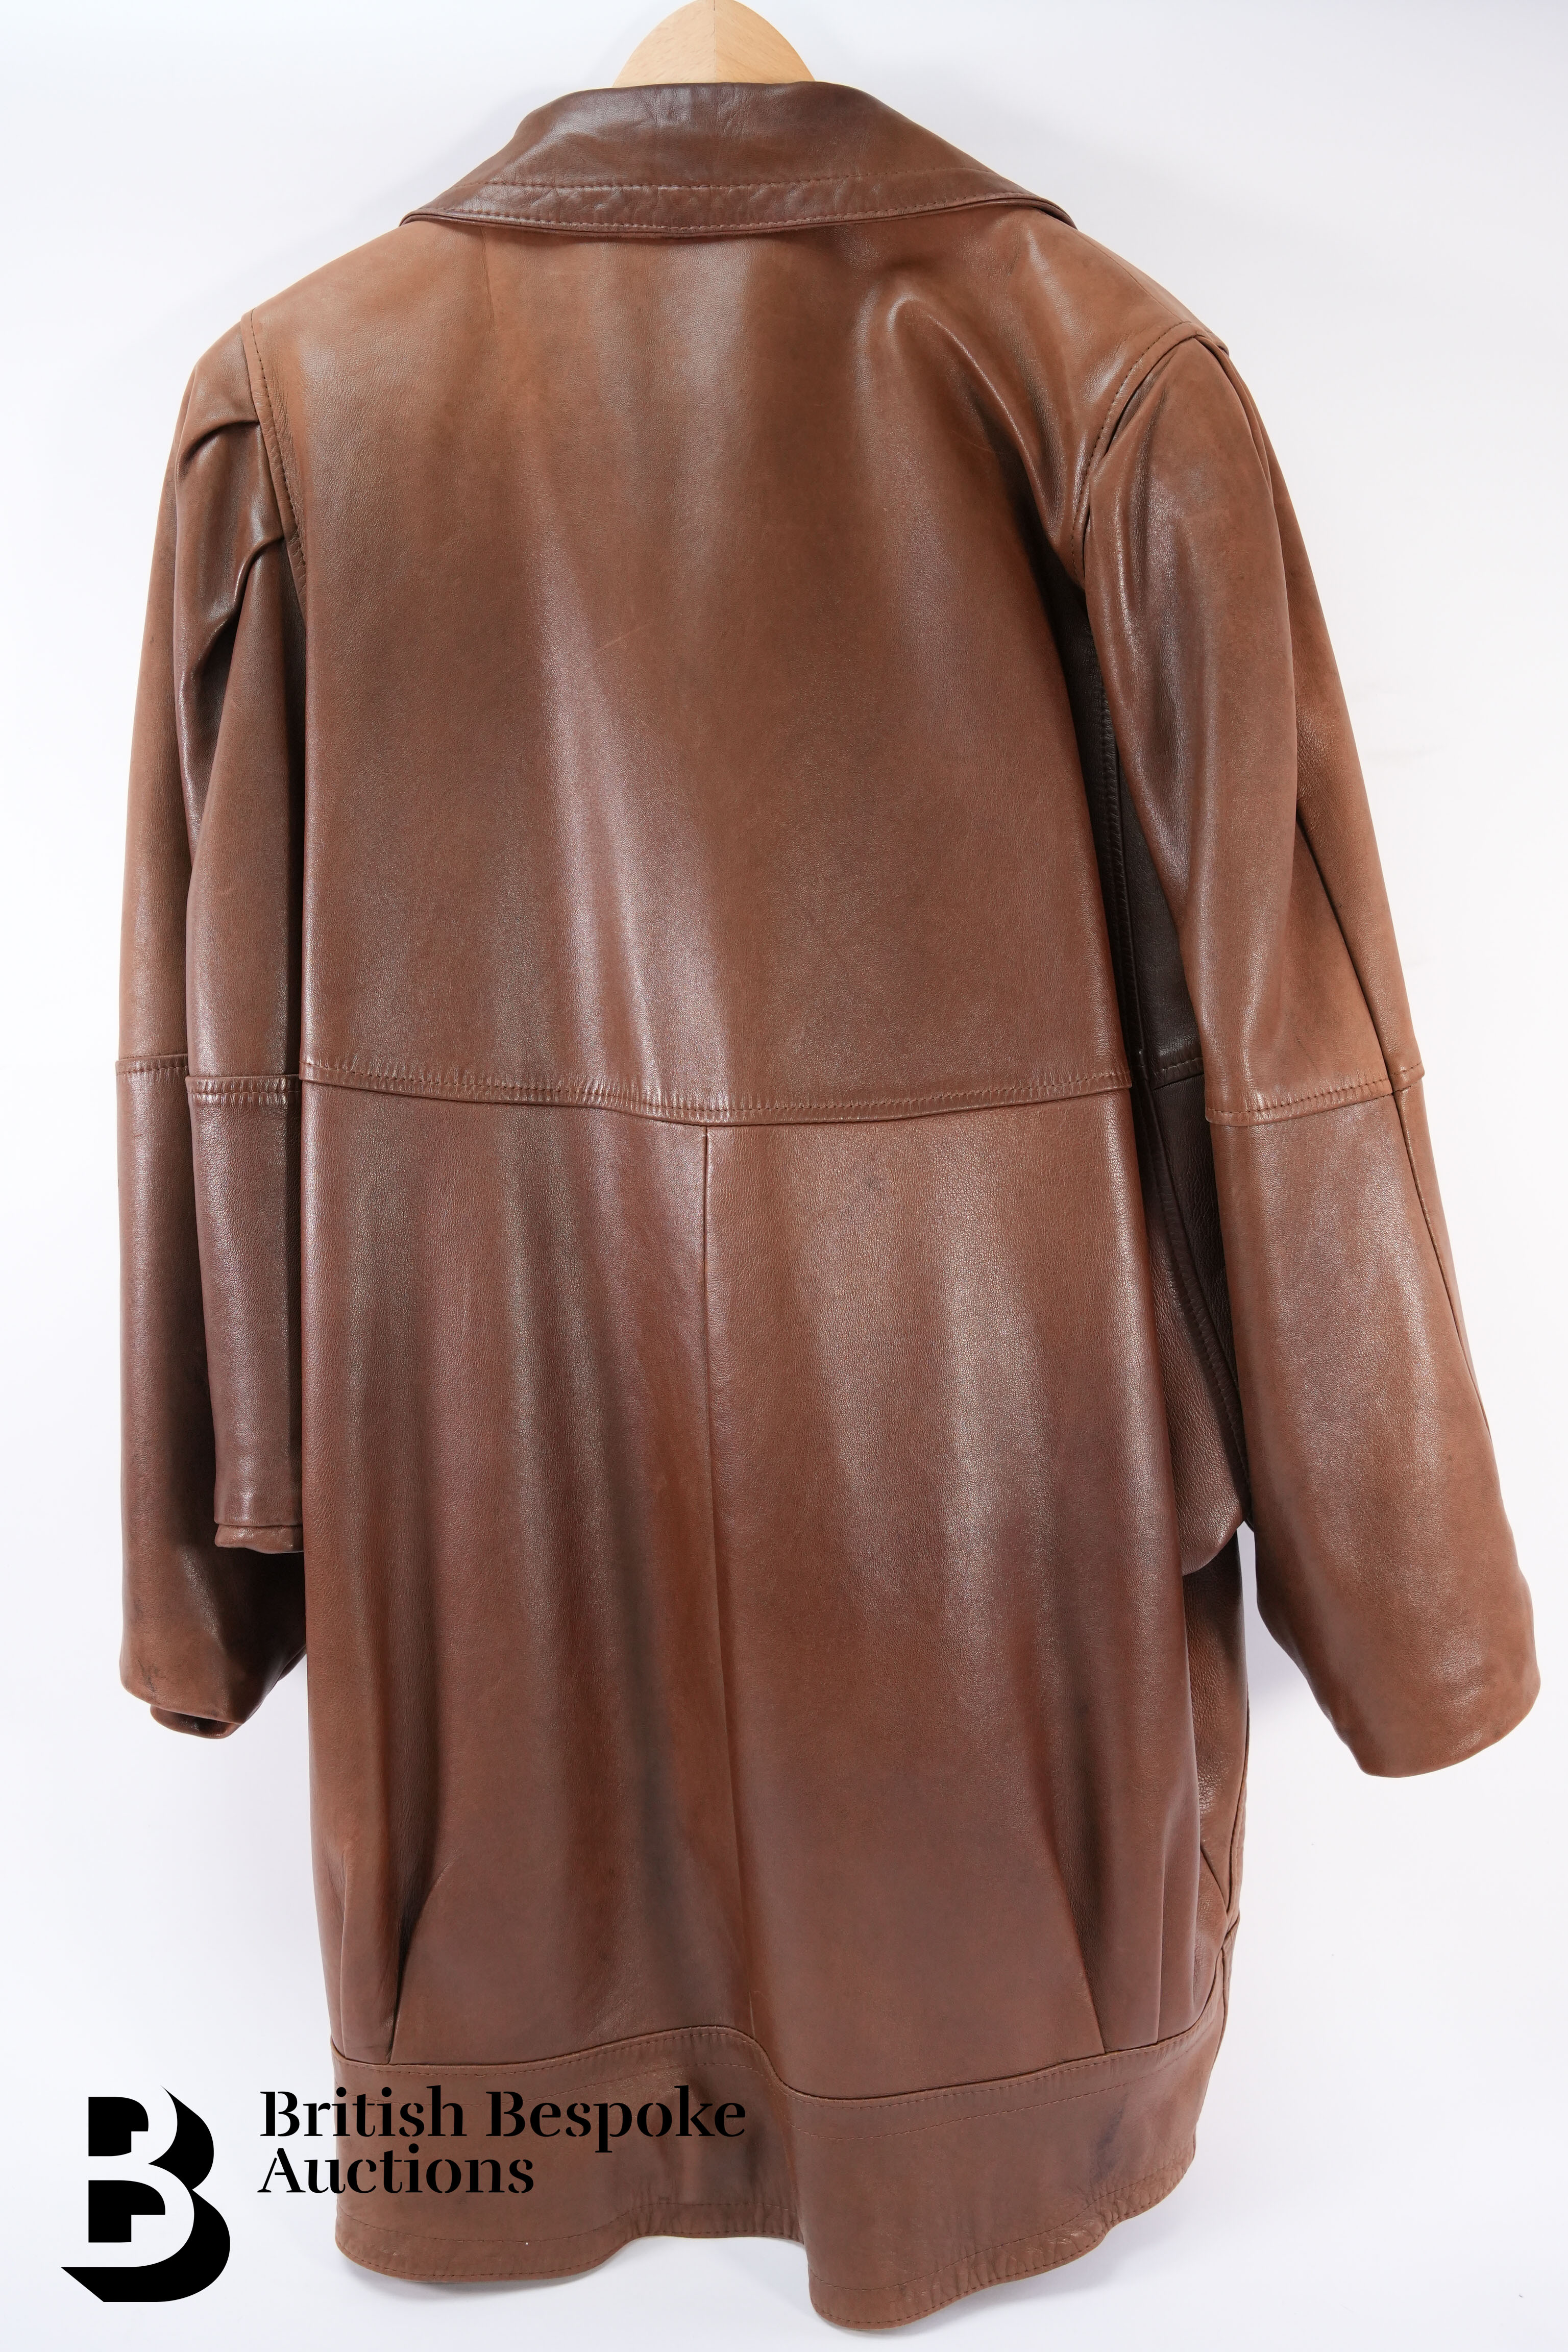 Jean Claude Jitouis Brown Leather Jacket - Image 4 of 5